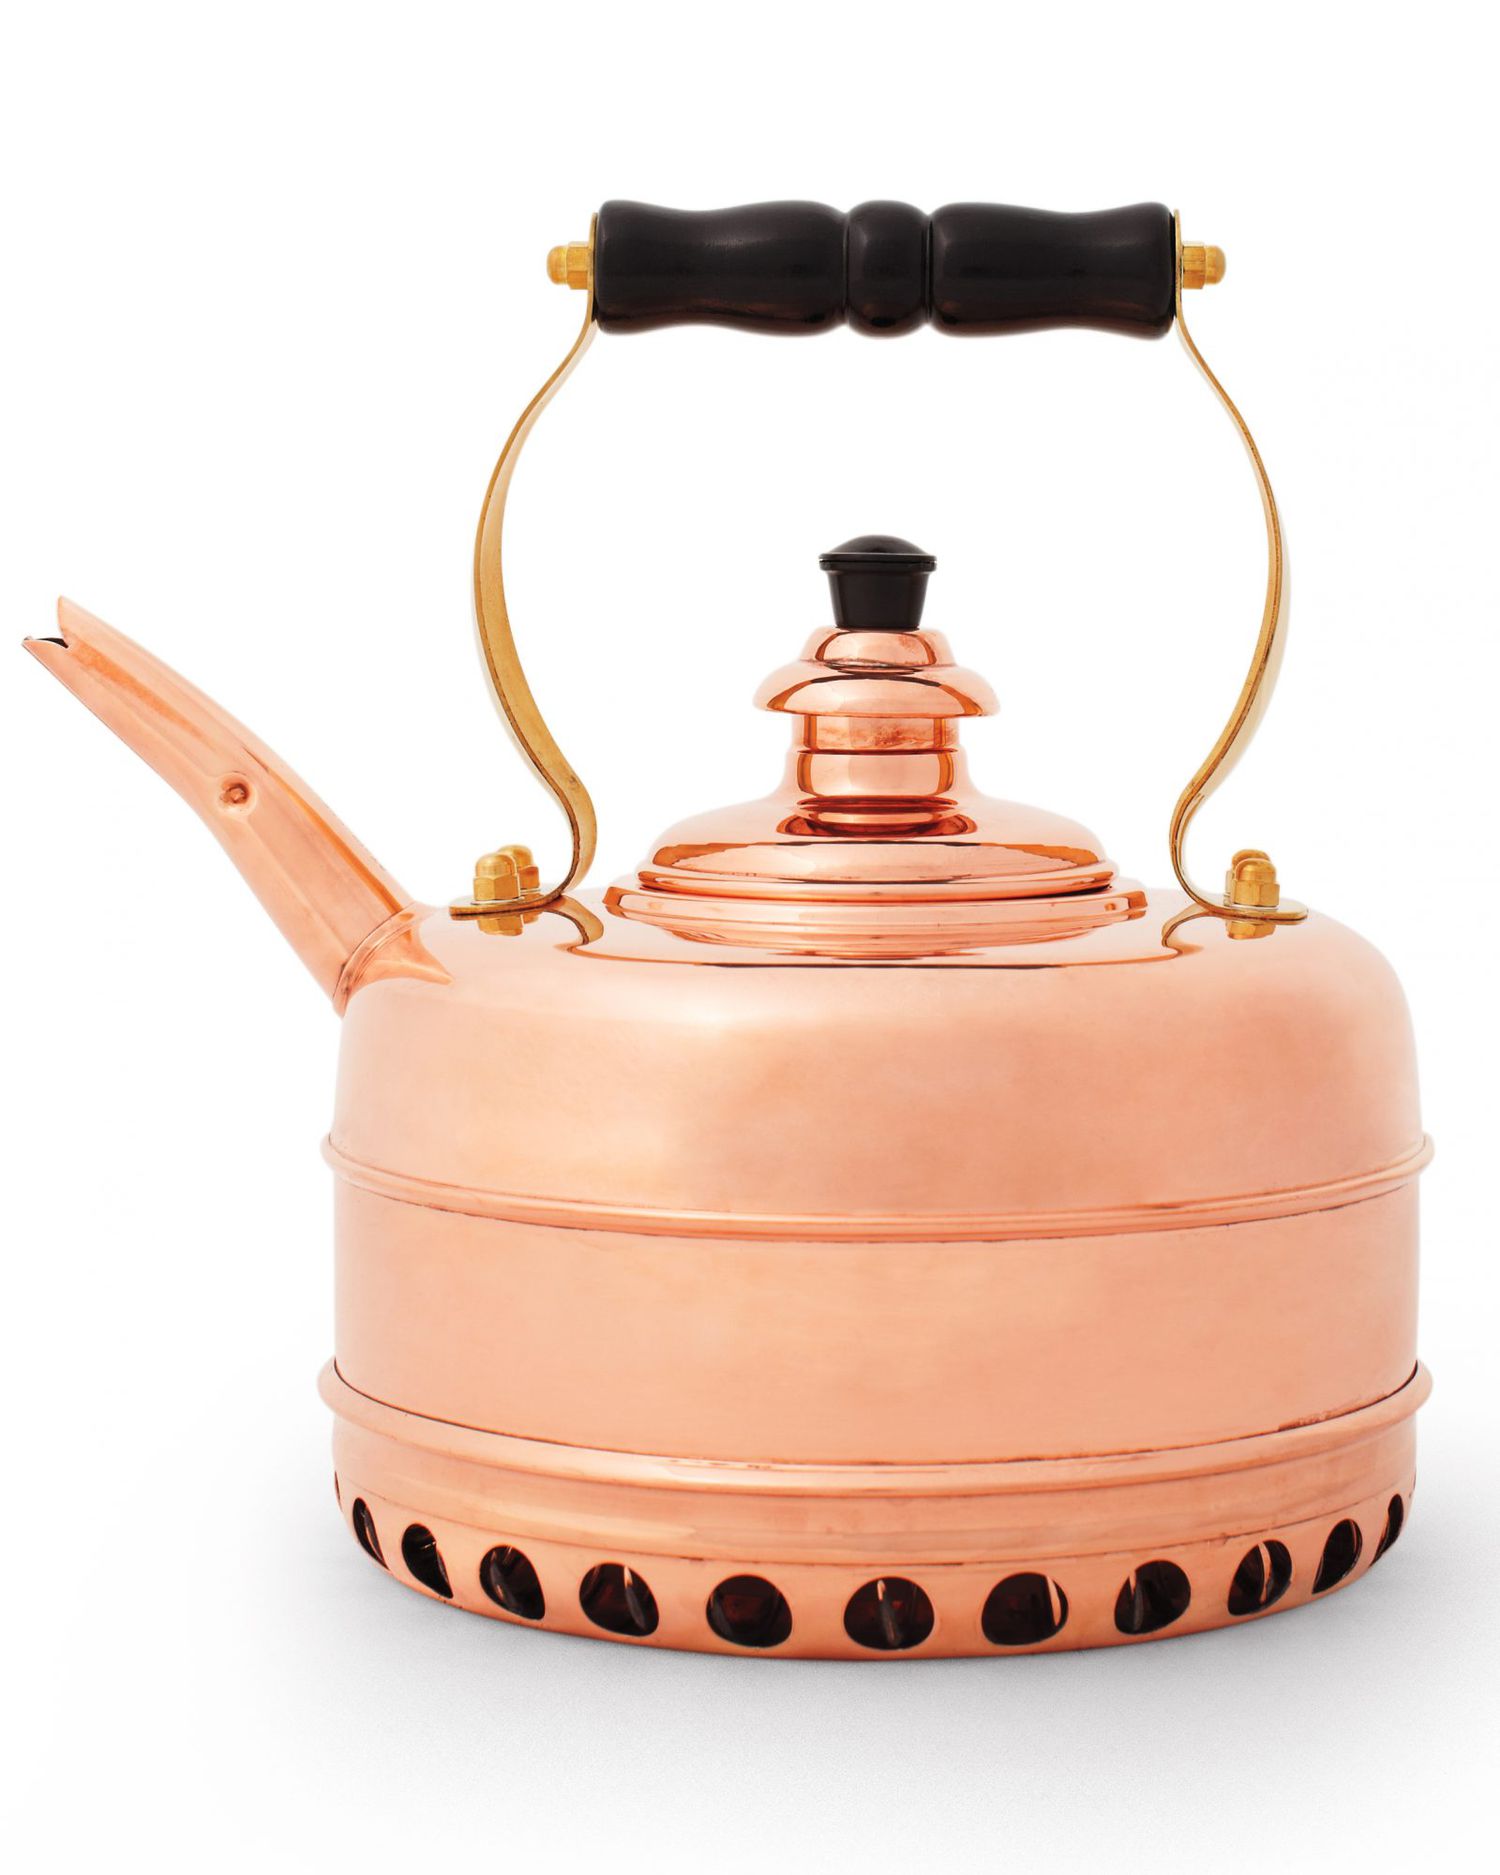 simplex-tea-kettle-079-mwd110609.jpg